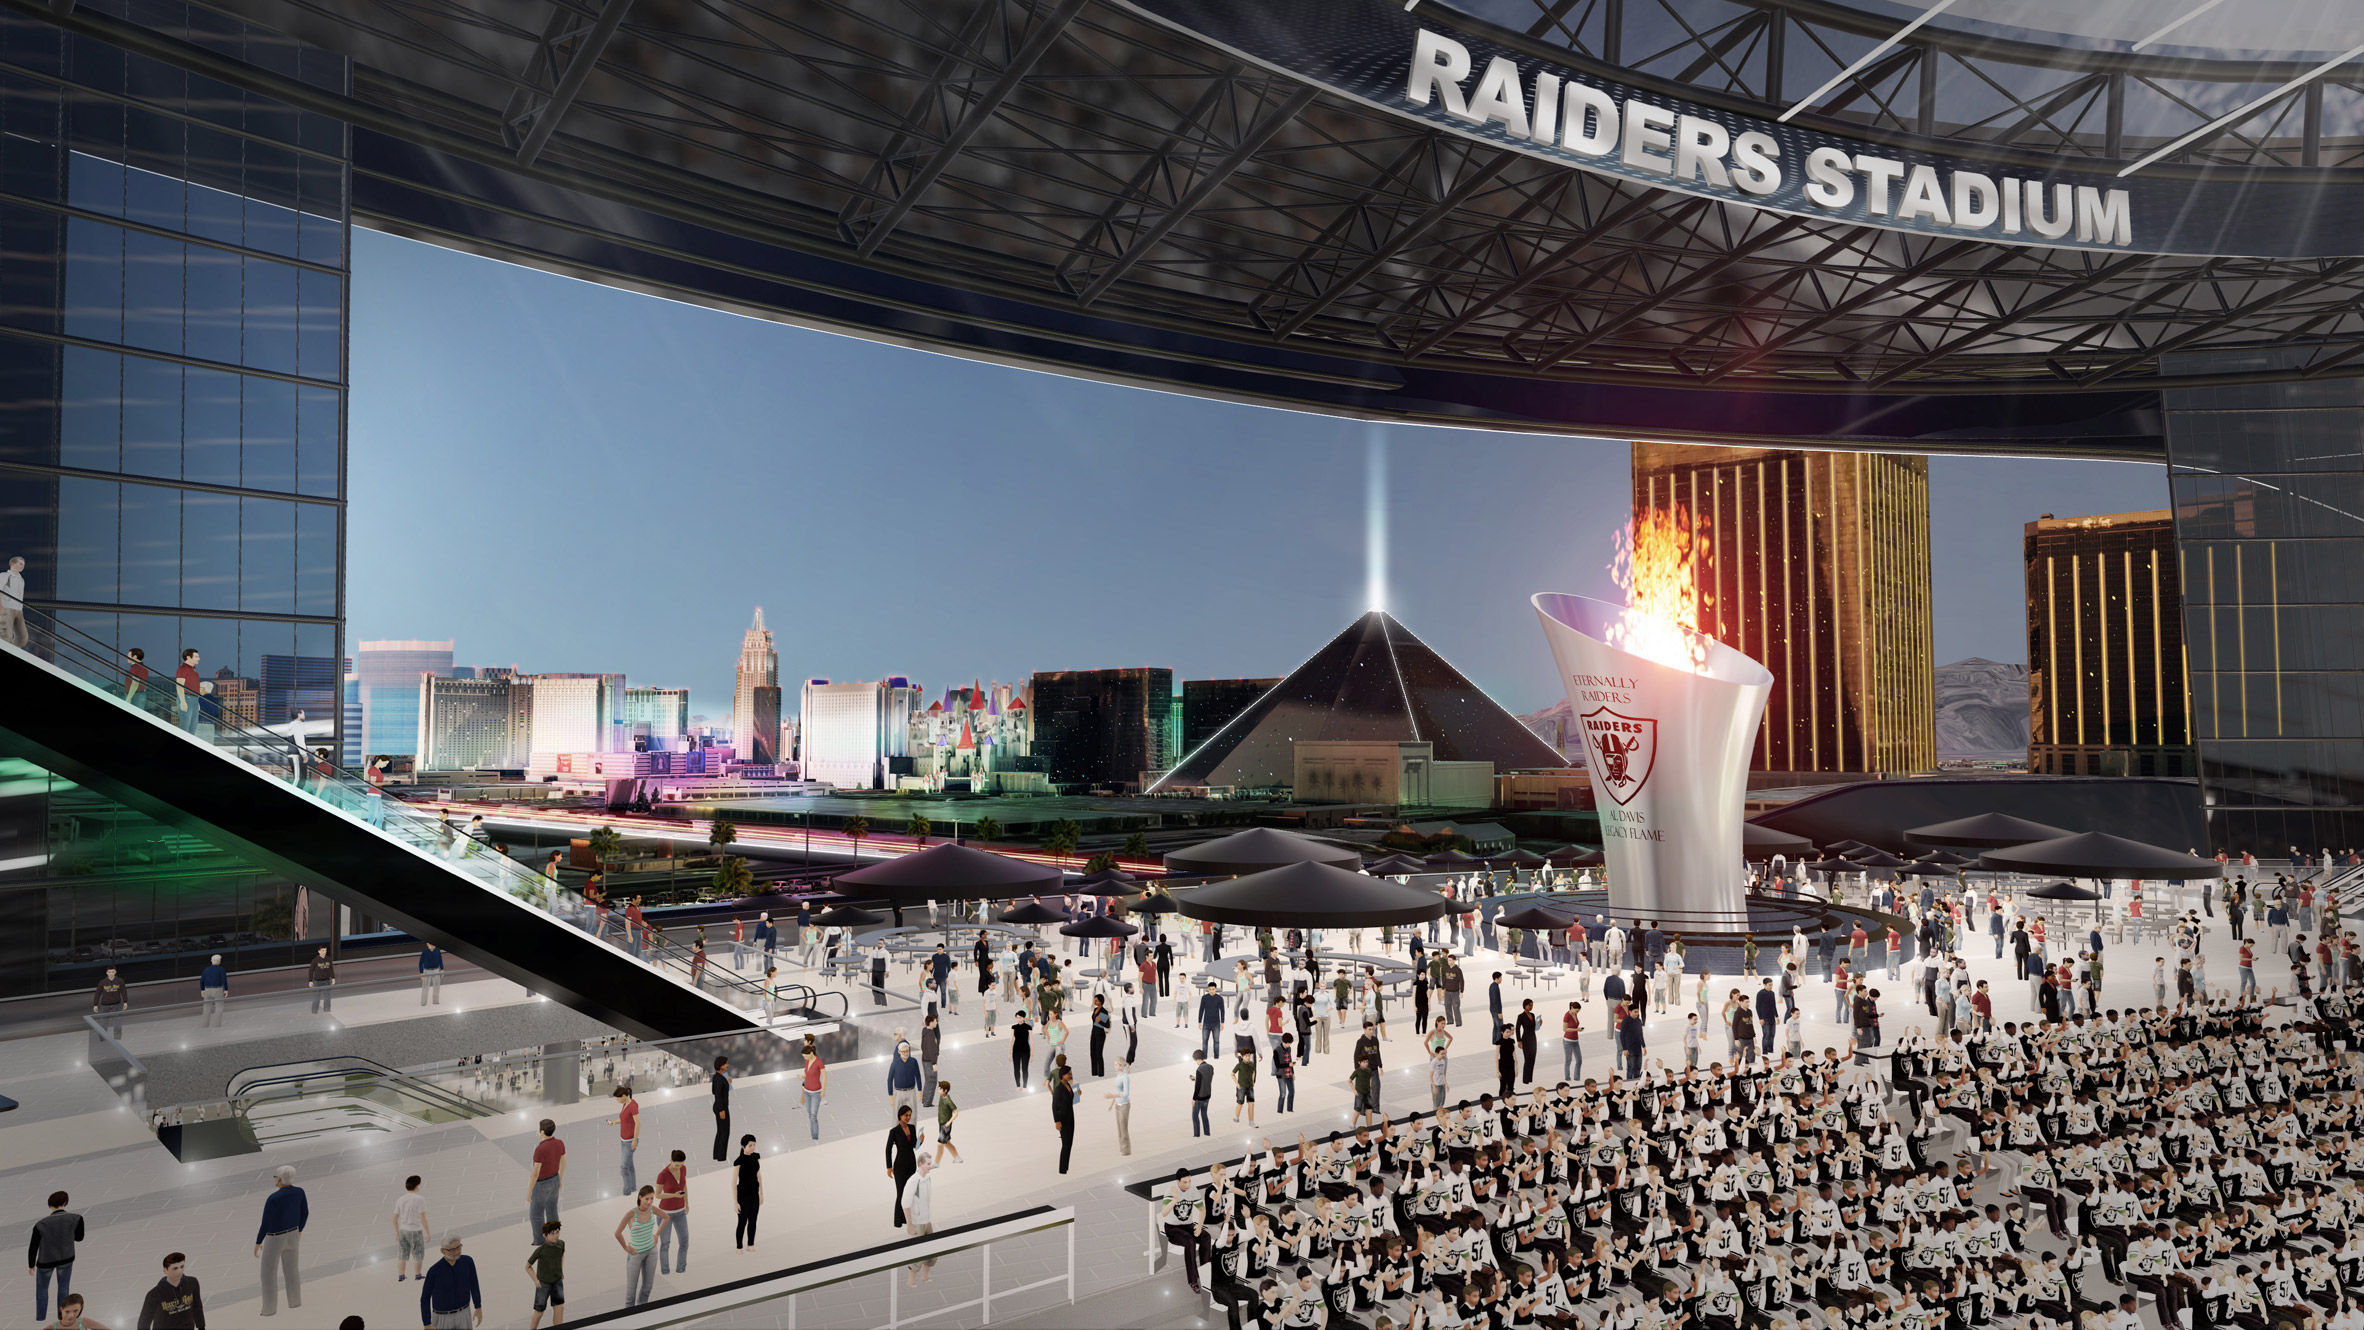 Las Vegas hopes to entice Oakland Raiders with $1.9 billion stadium